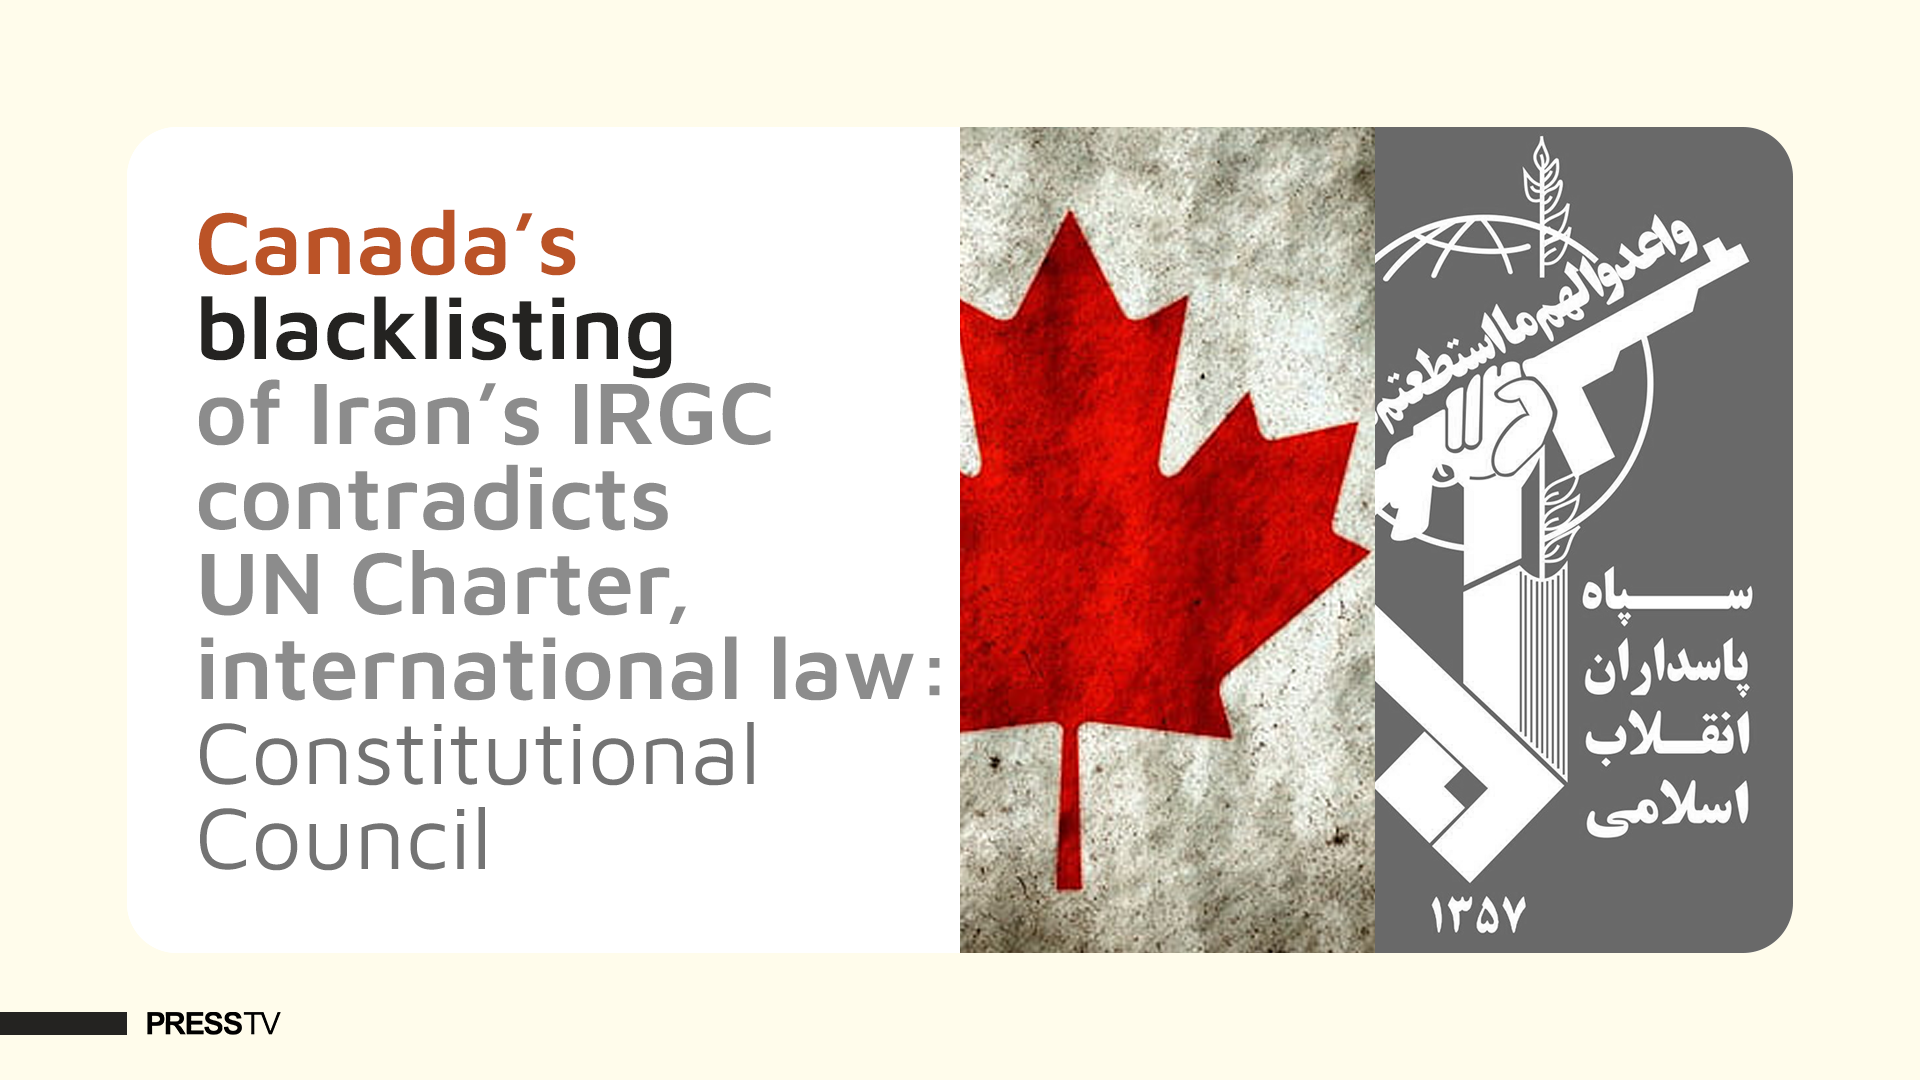 'Canada's blacklisting of Iran's IRGC contradicts UN Charter, international law'